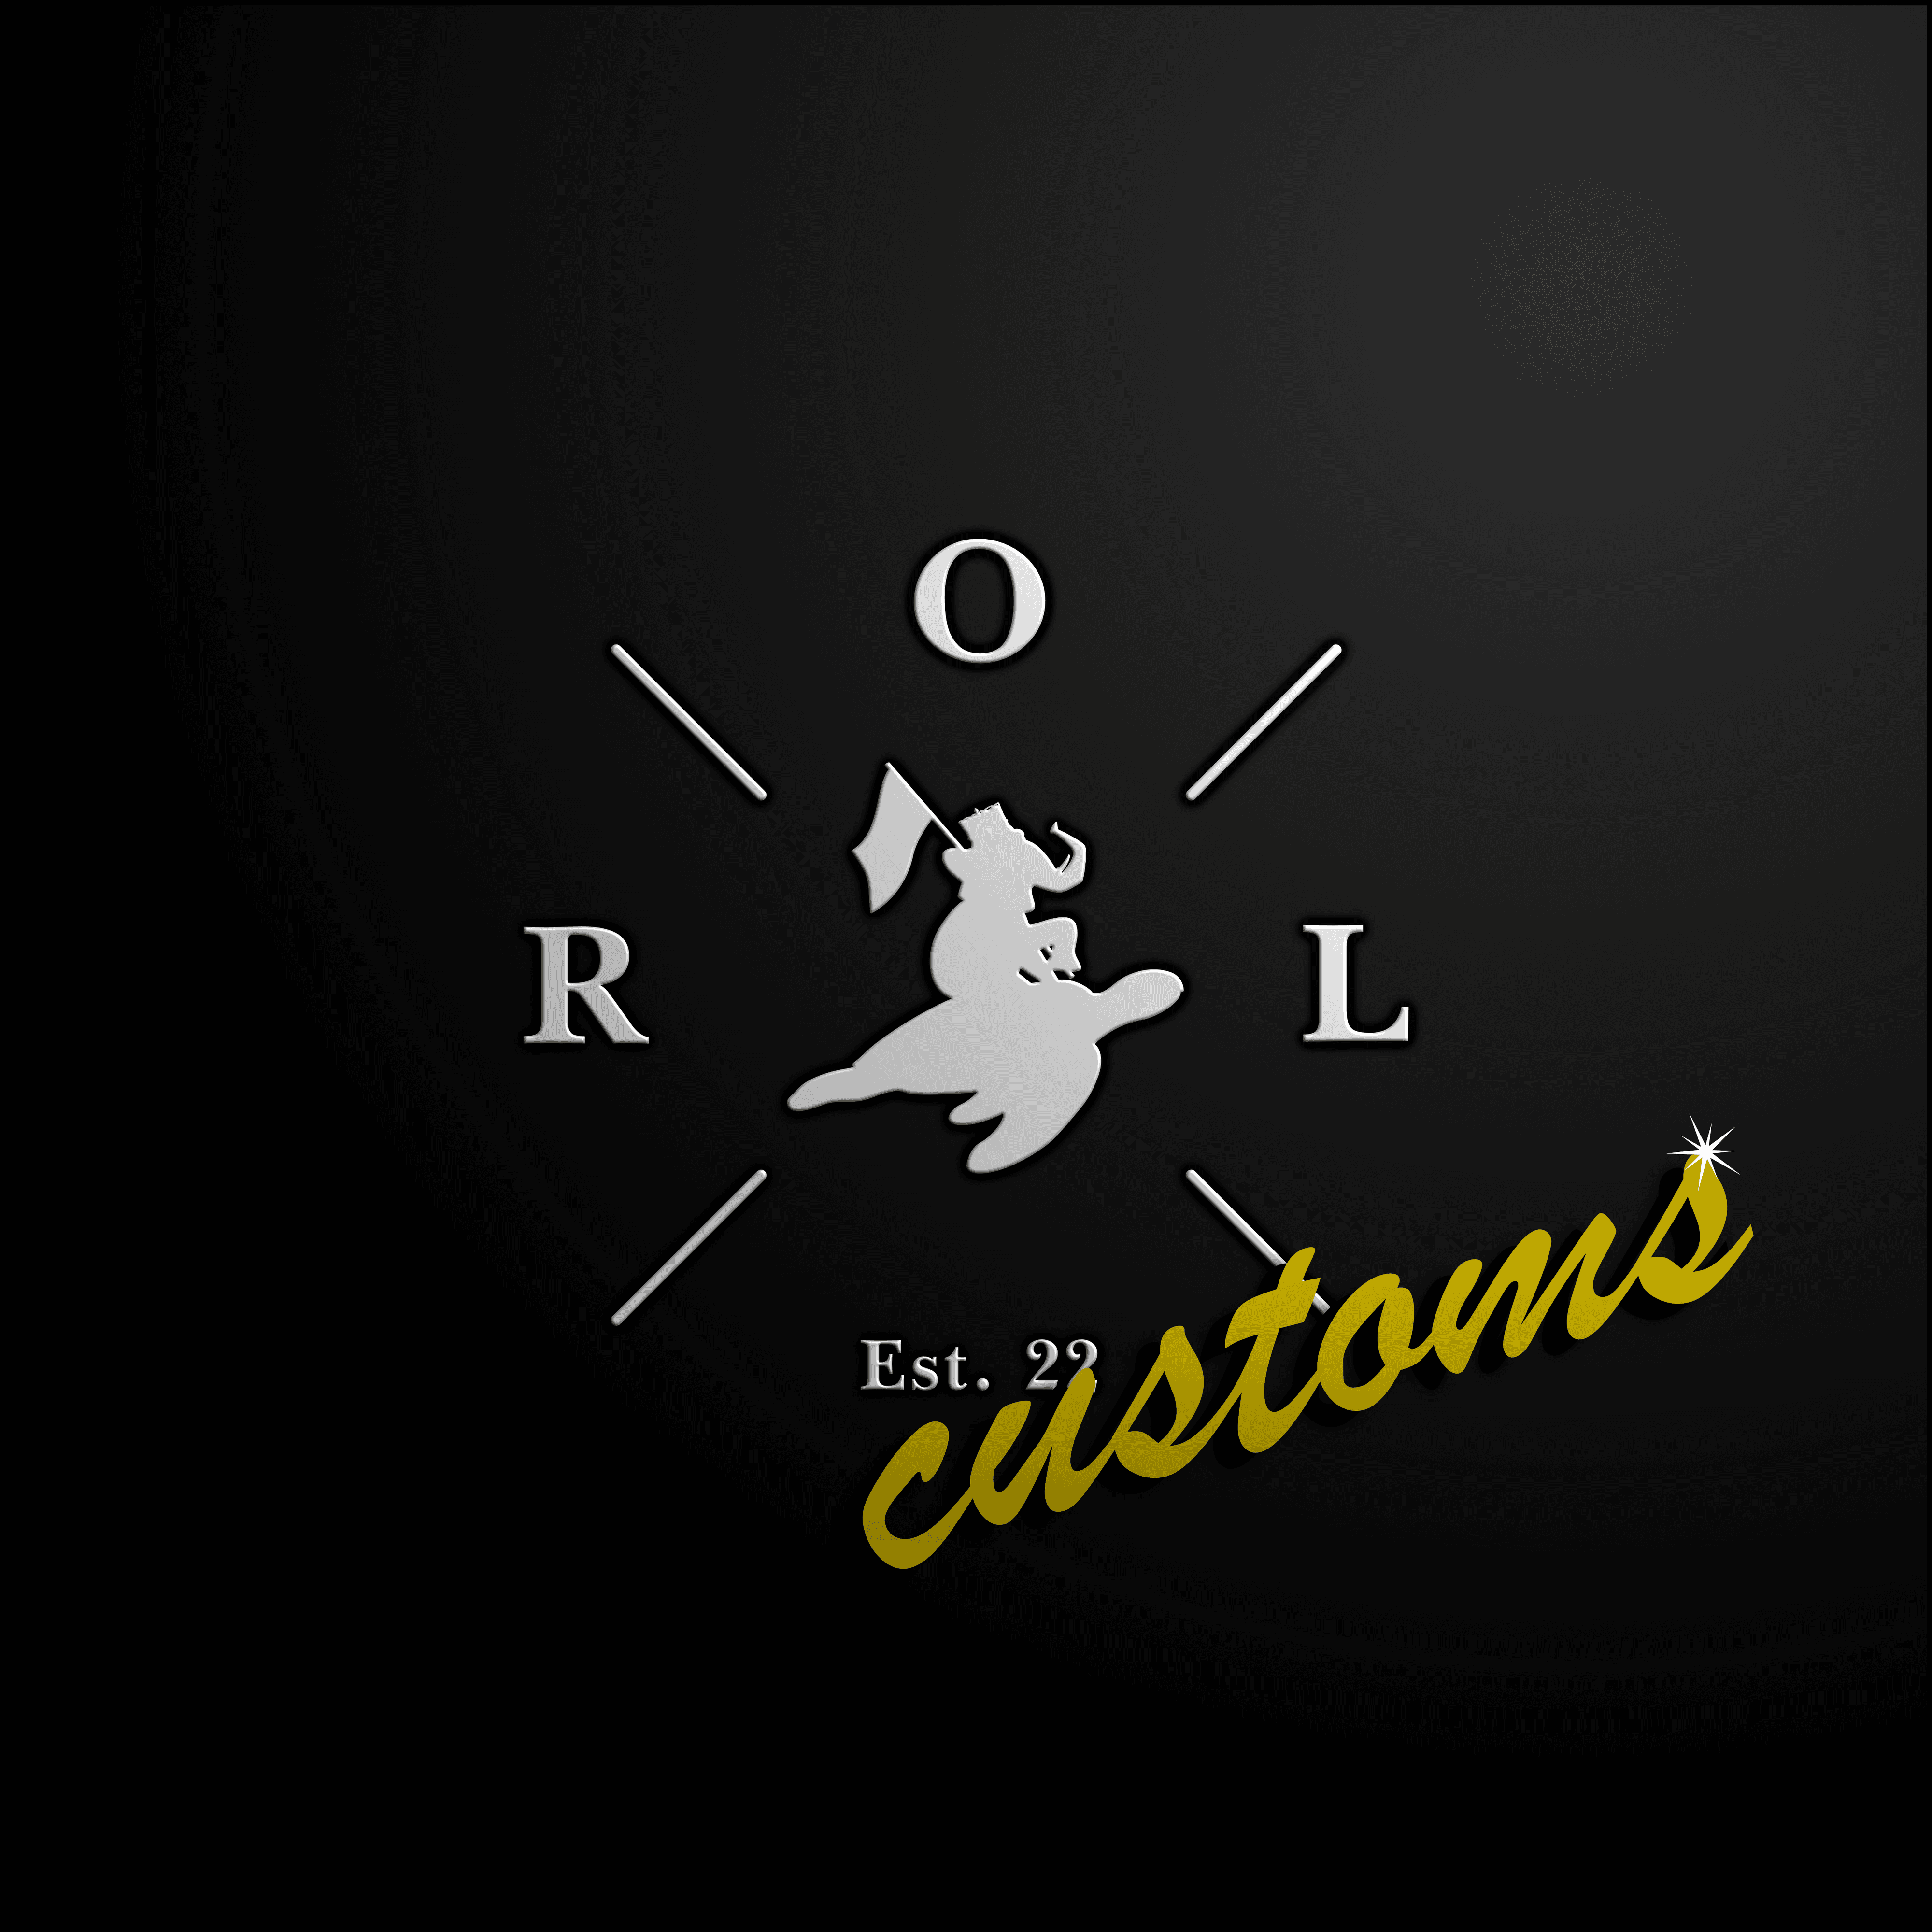 Ocean Racing League Customs (CORL)